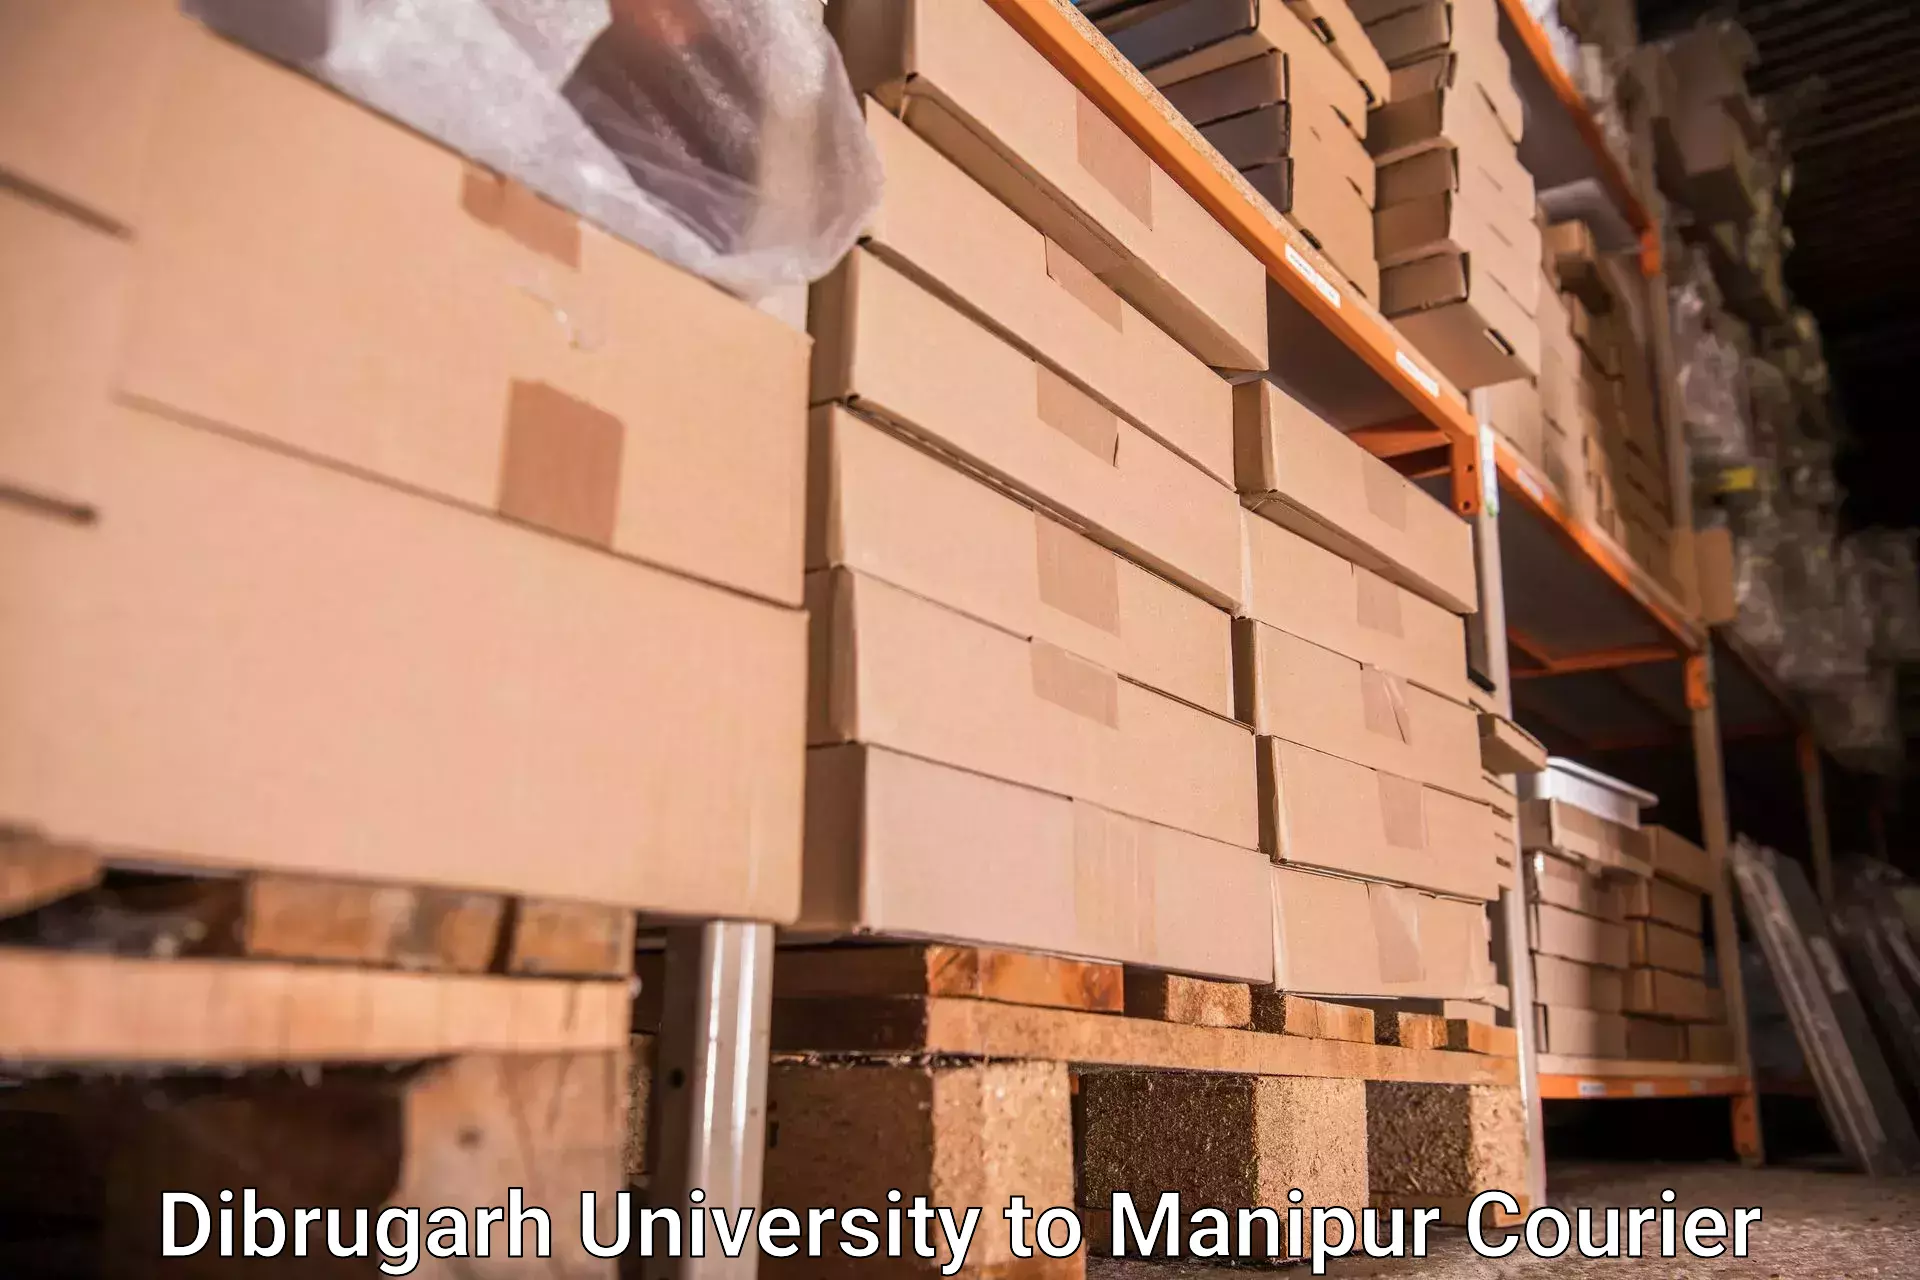 Baggage shipping experts Dibrugarh University to Imphal